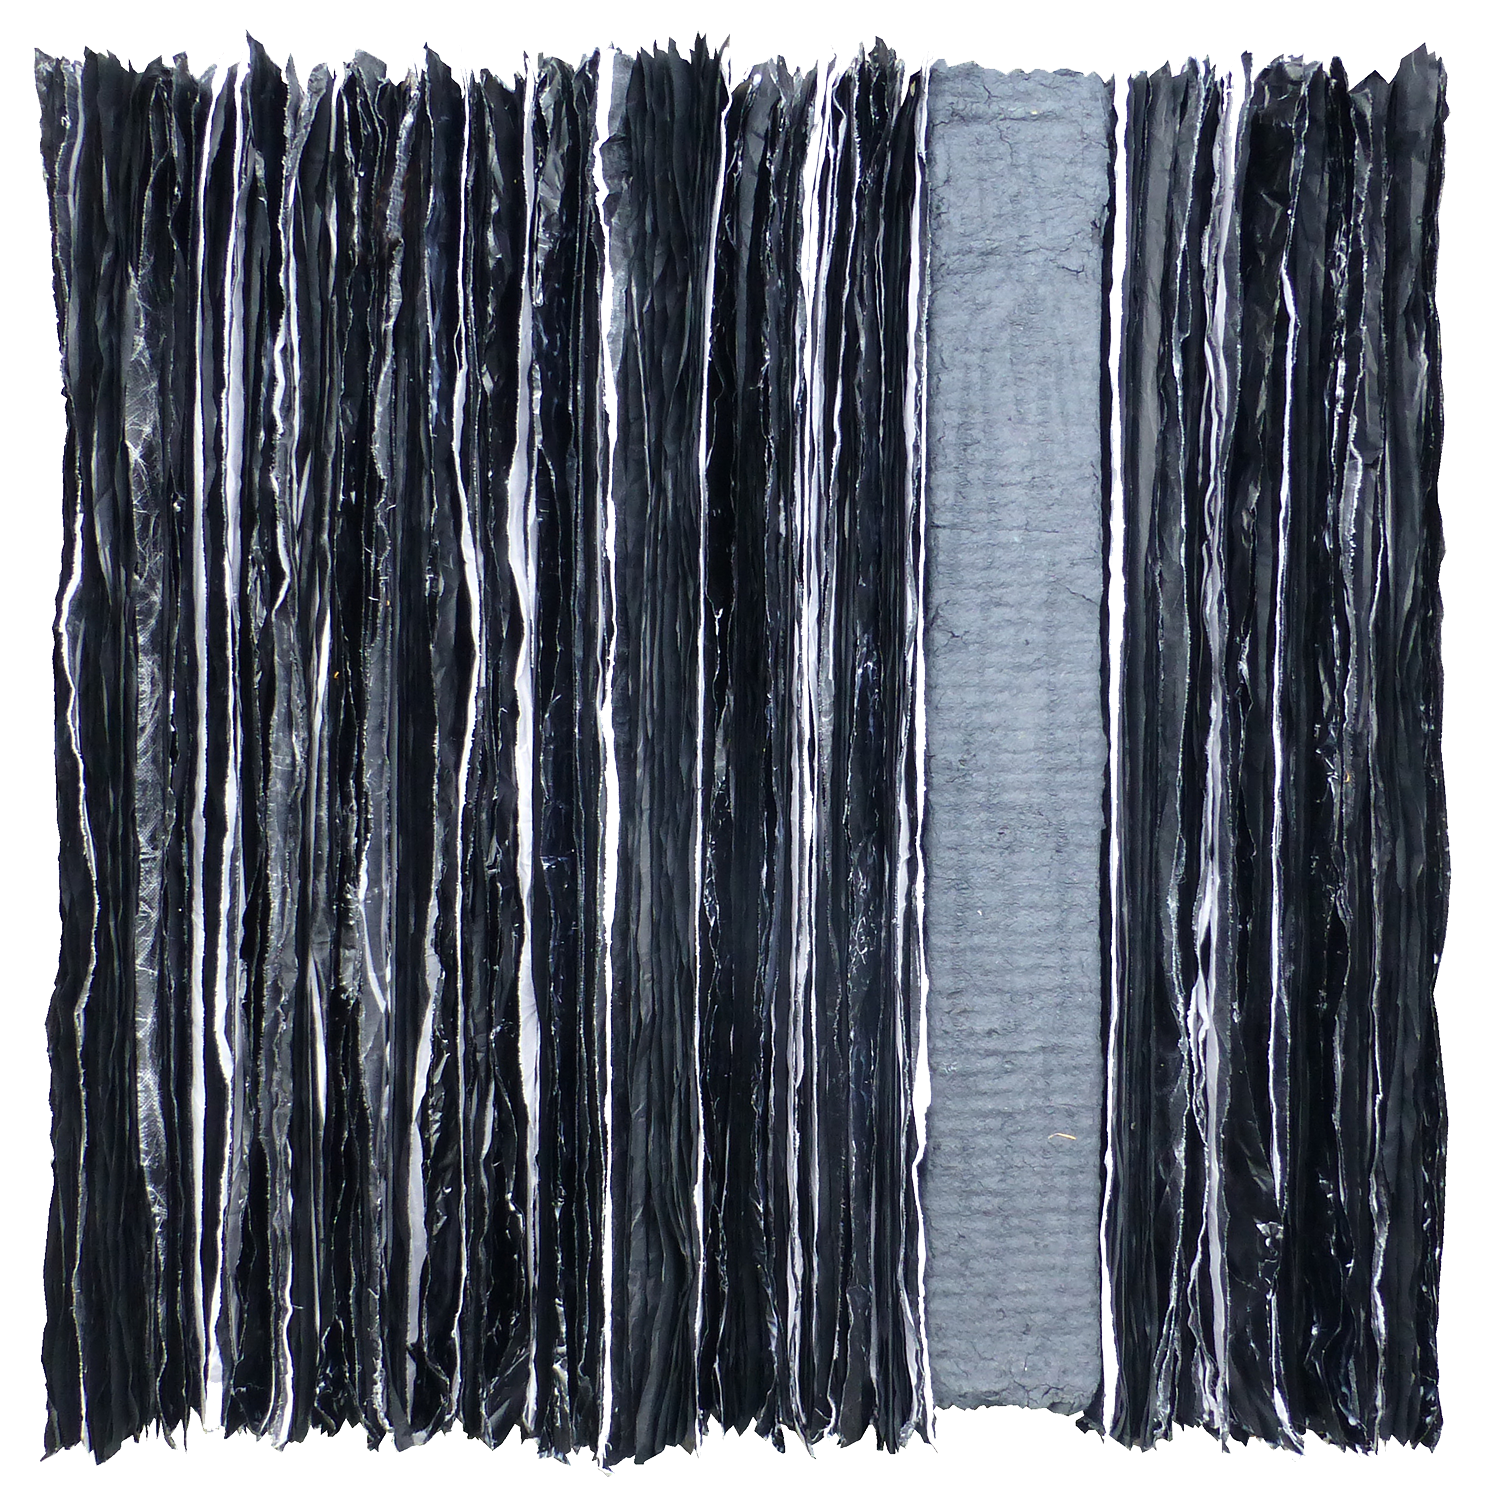 Spelm Nair Engiadinais | Papyrus, Handgeschöpftes Papier, Cotton, Paraffin | 80 x 80 x 20 cm